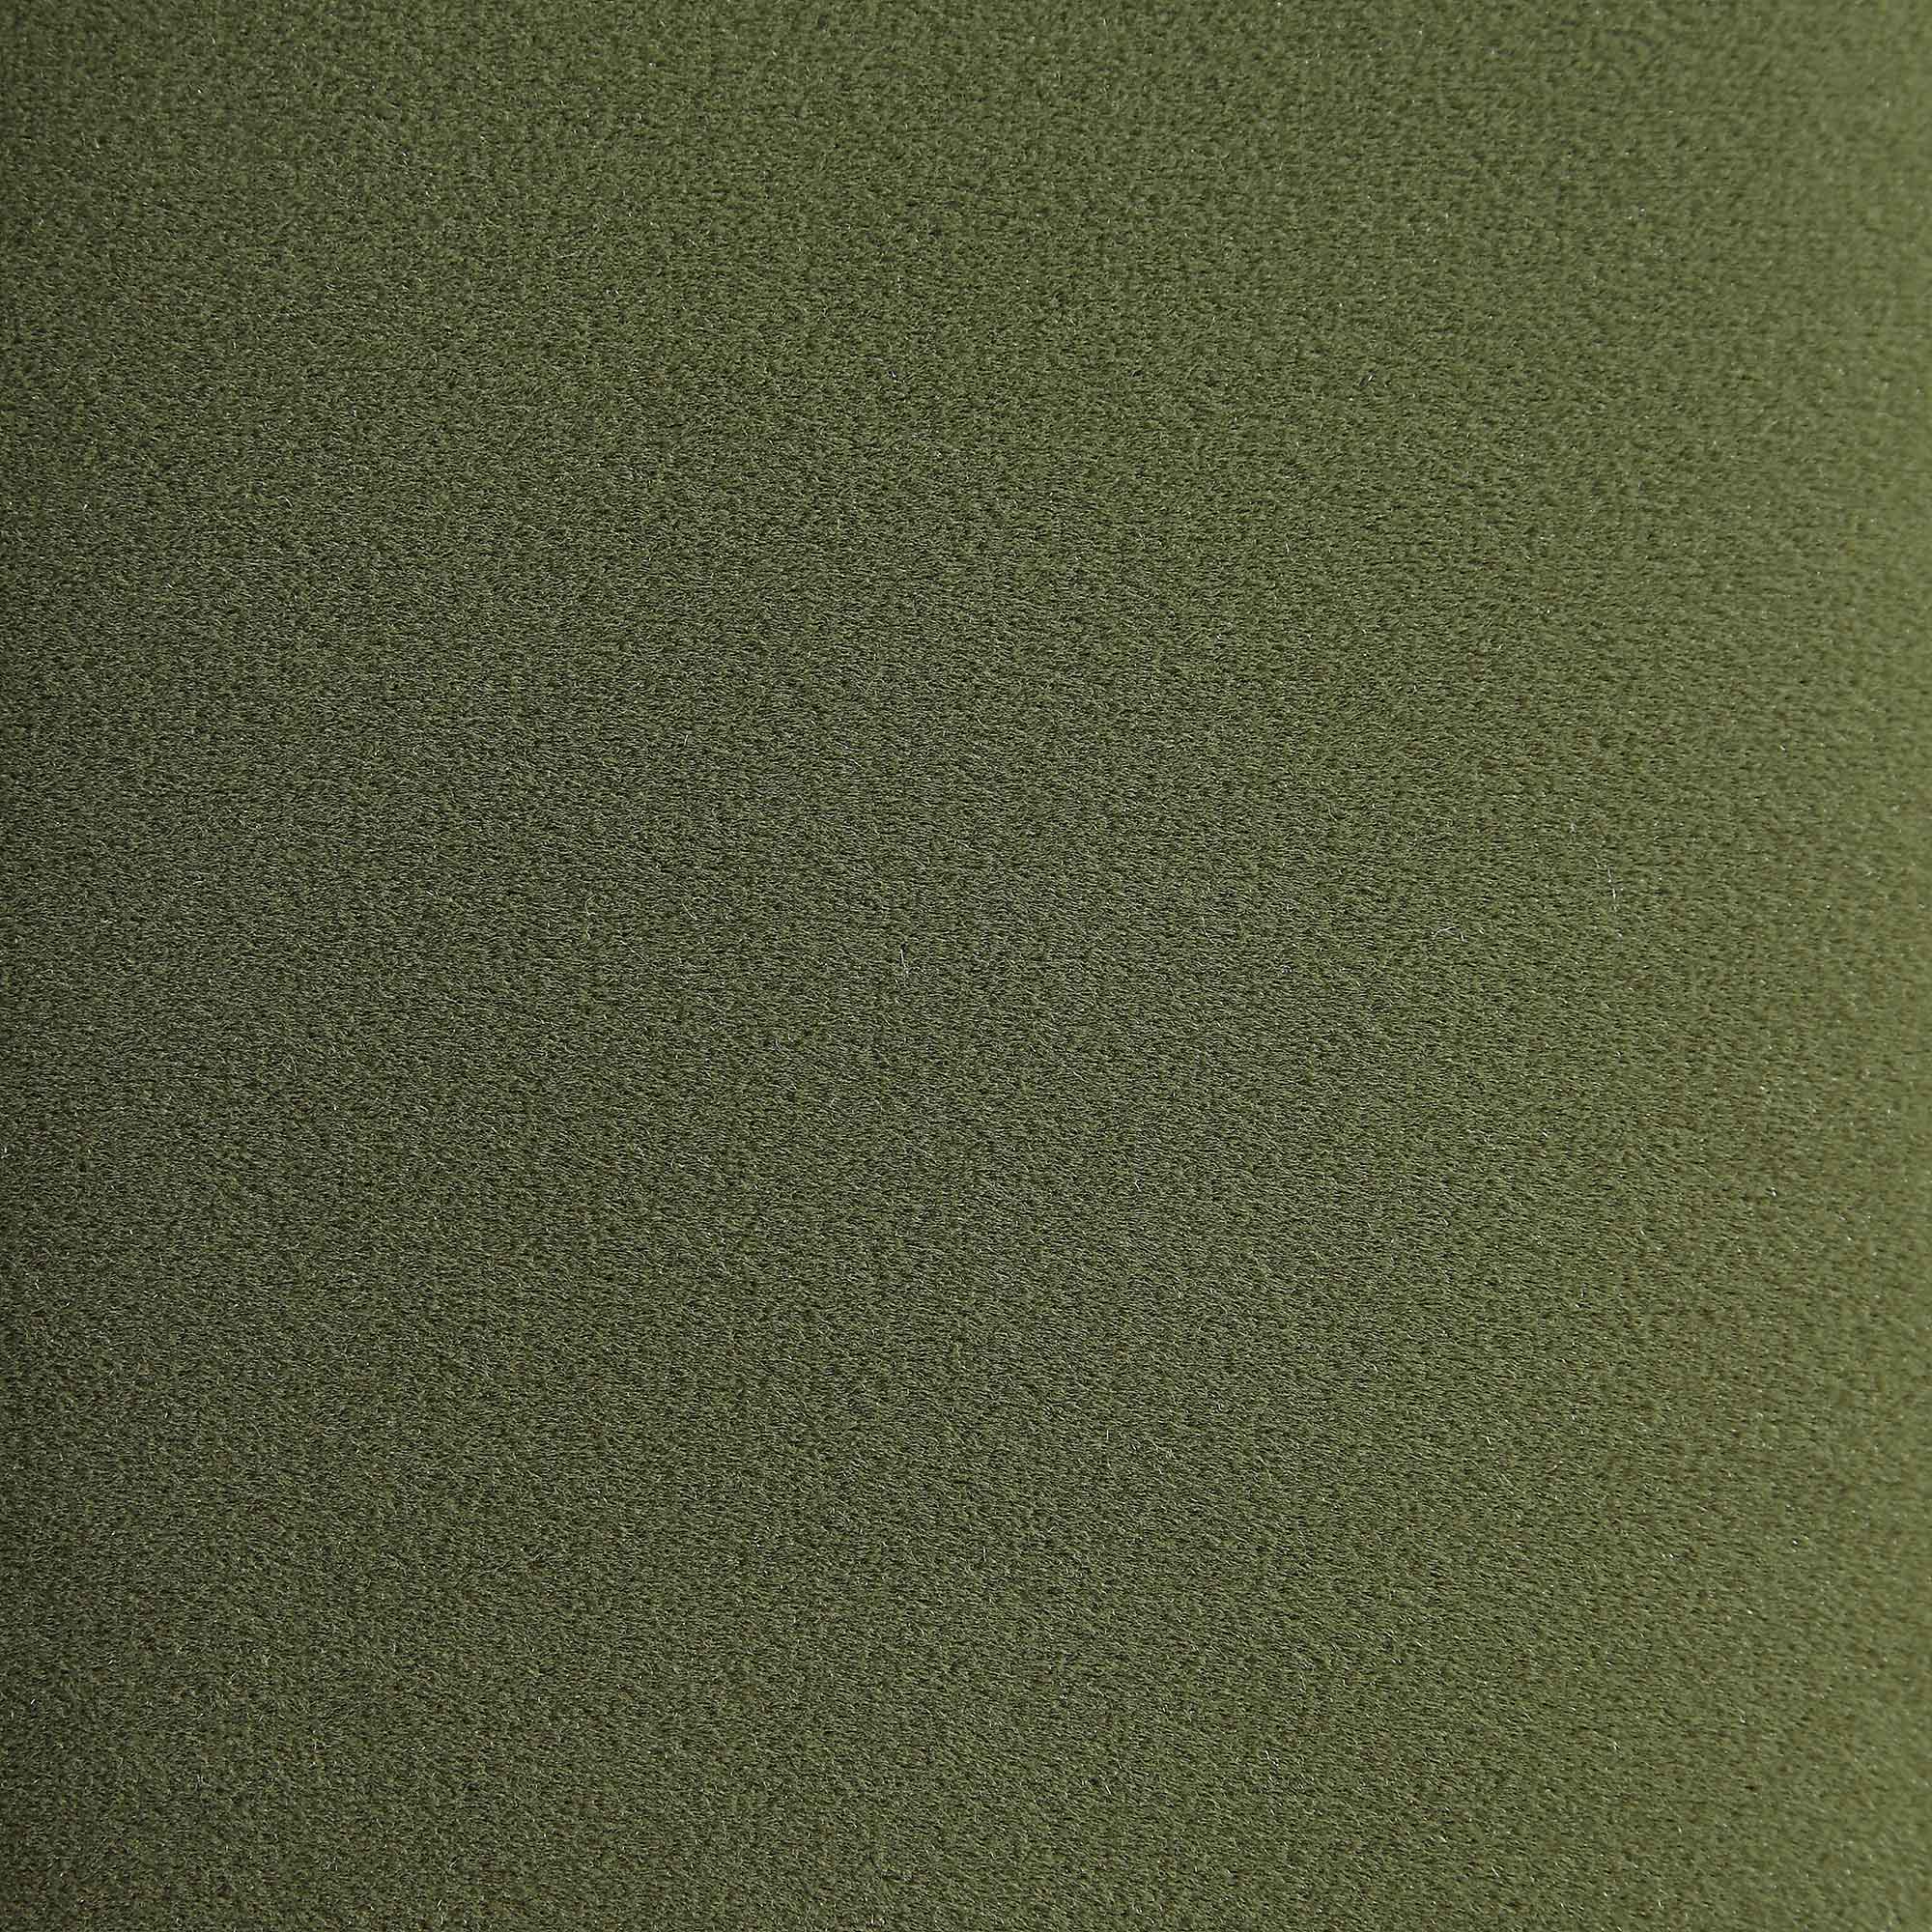 Wilton Moss Green Velvet Ottoman Storage Bed